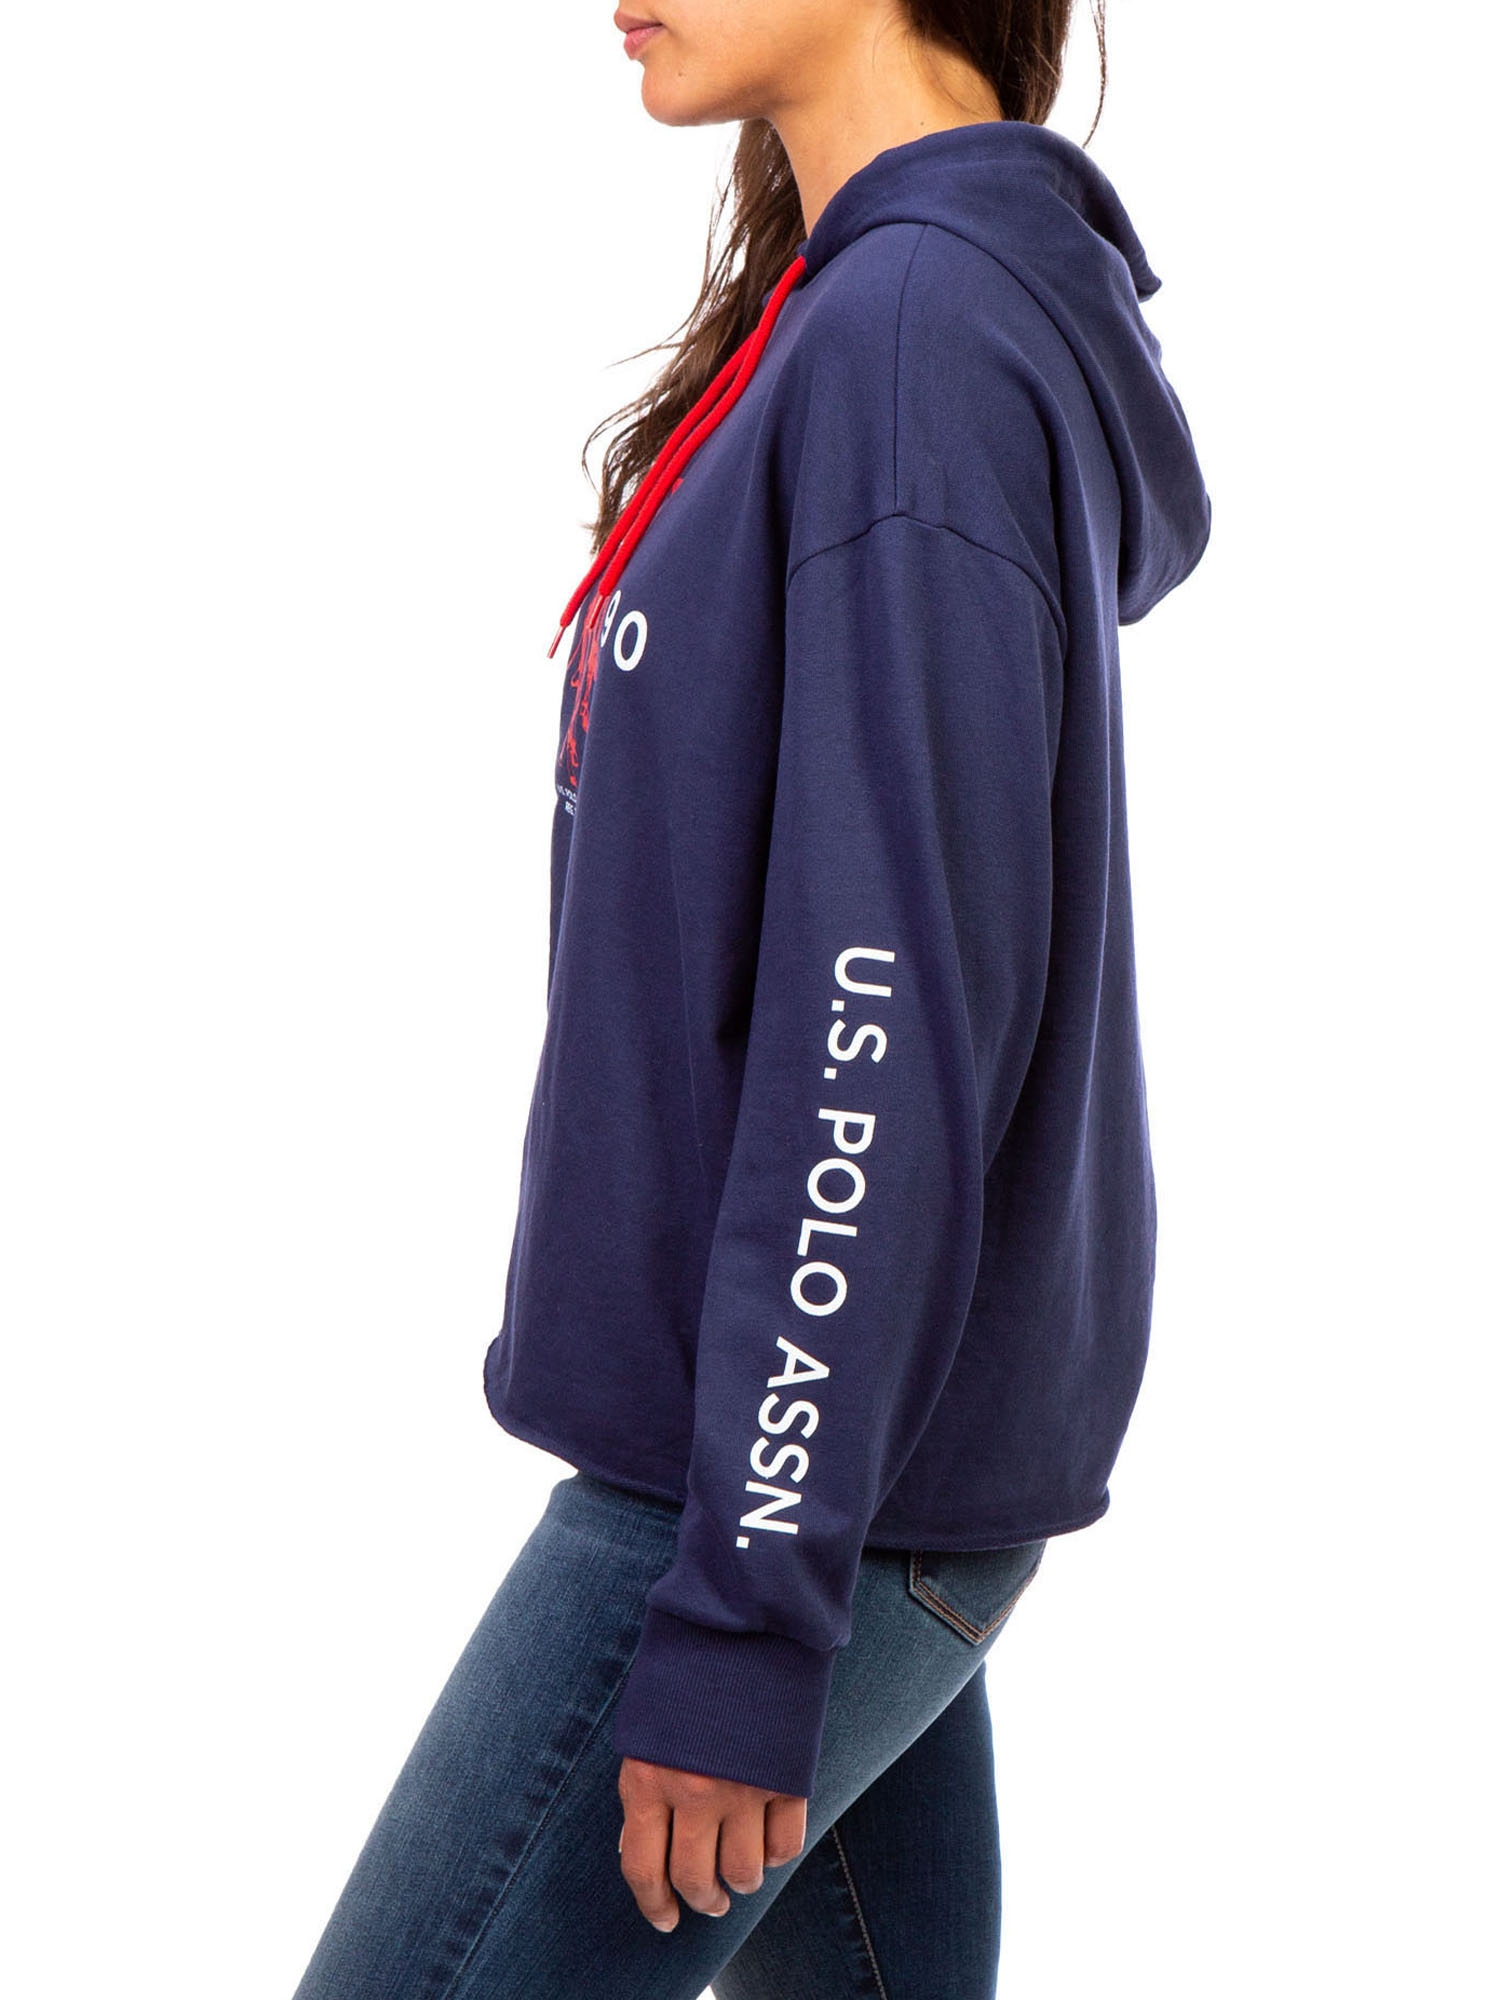 U.S. Polo Assn. Meet & Greet Logo Sweatshirt Women's - image 3 of 5